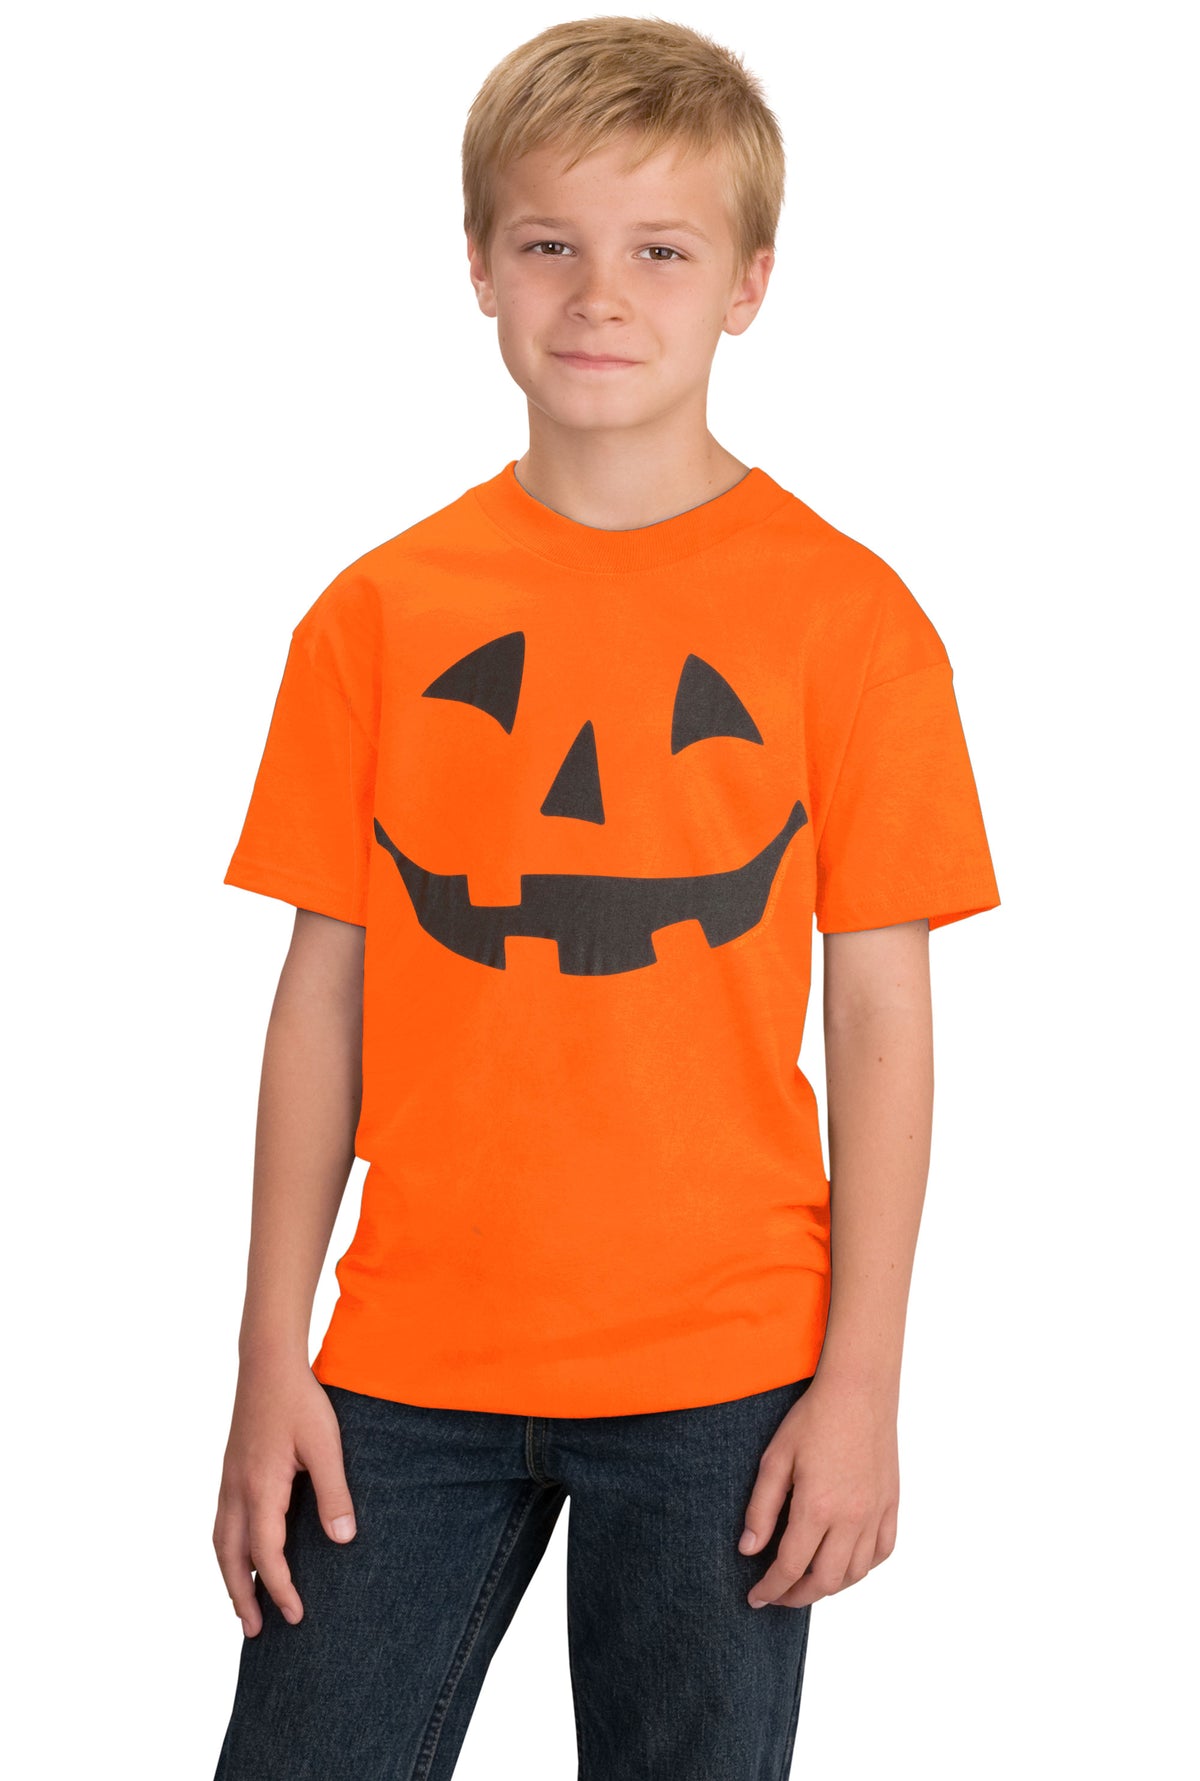 JACK O' LANTERN PUMPKIN Youth T-shirt / Easy Halloween Costume Fun Tee